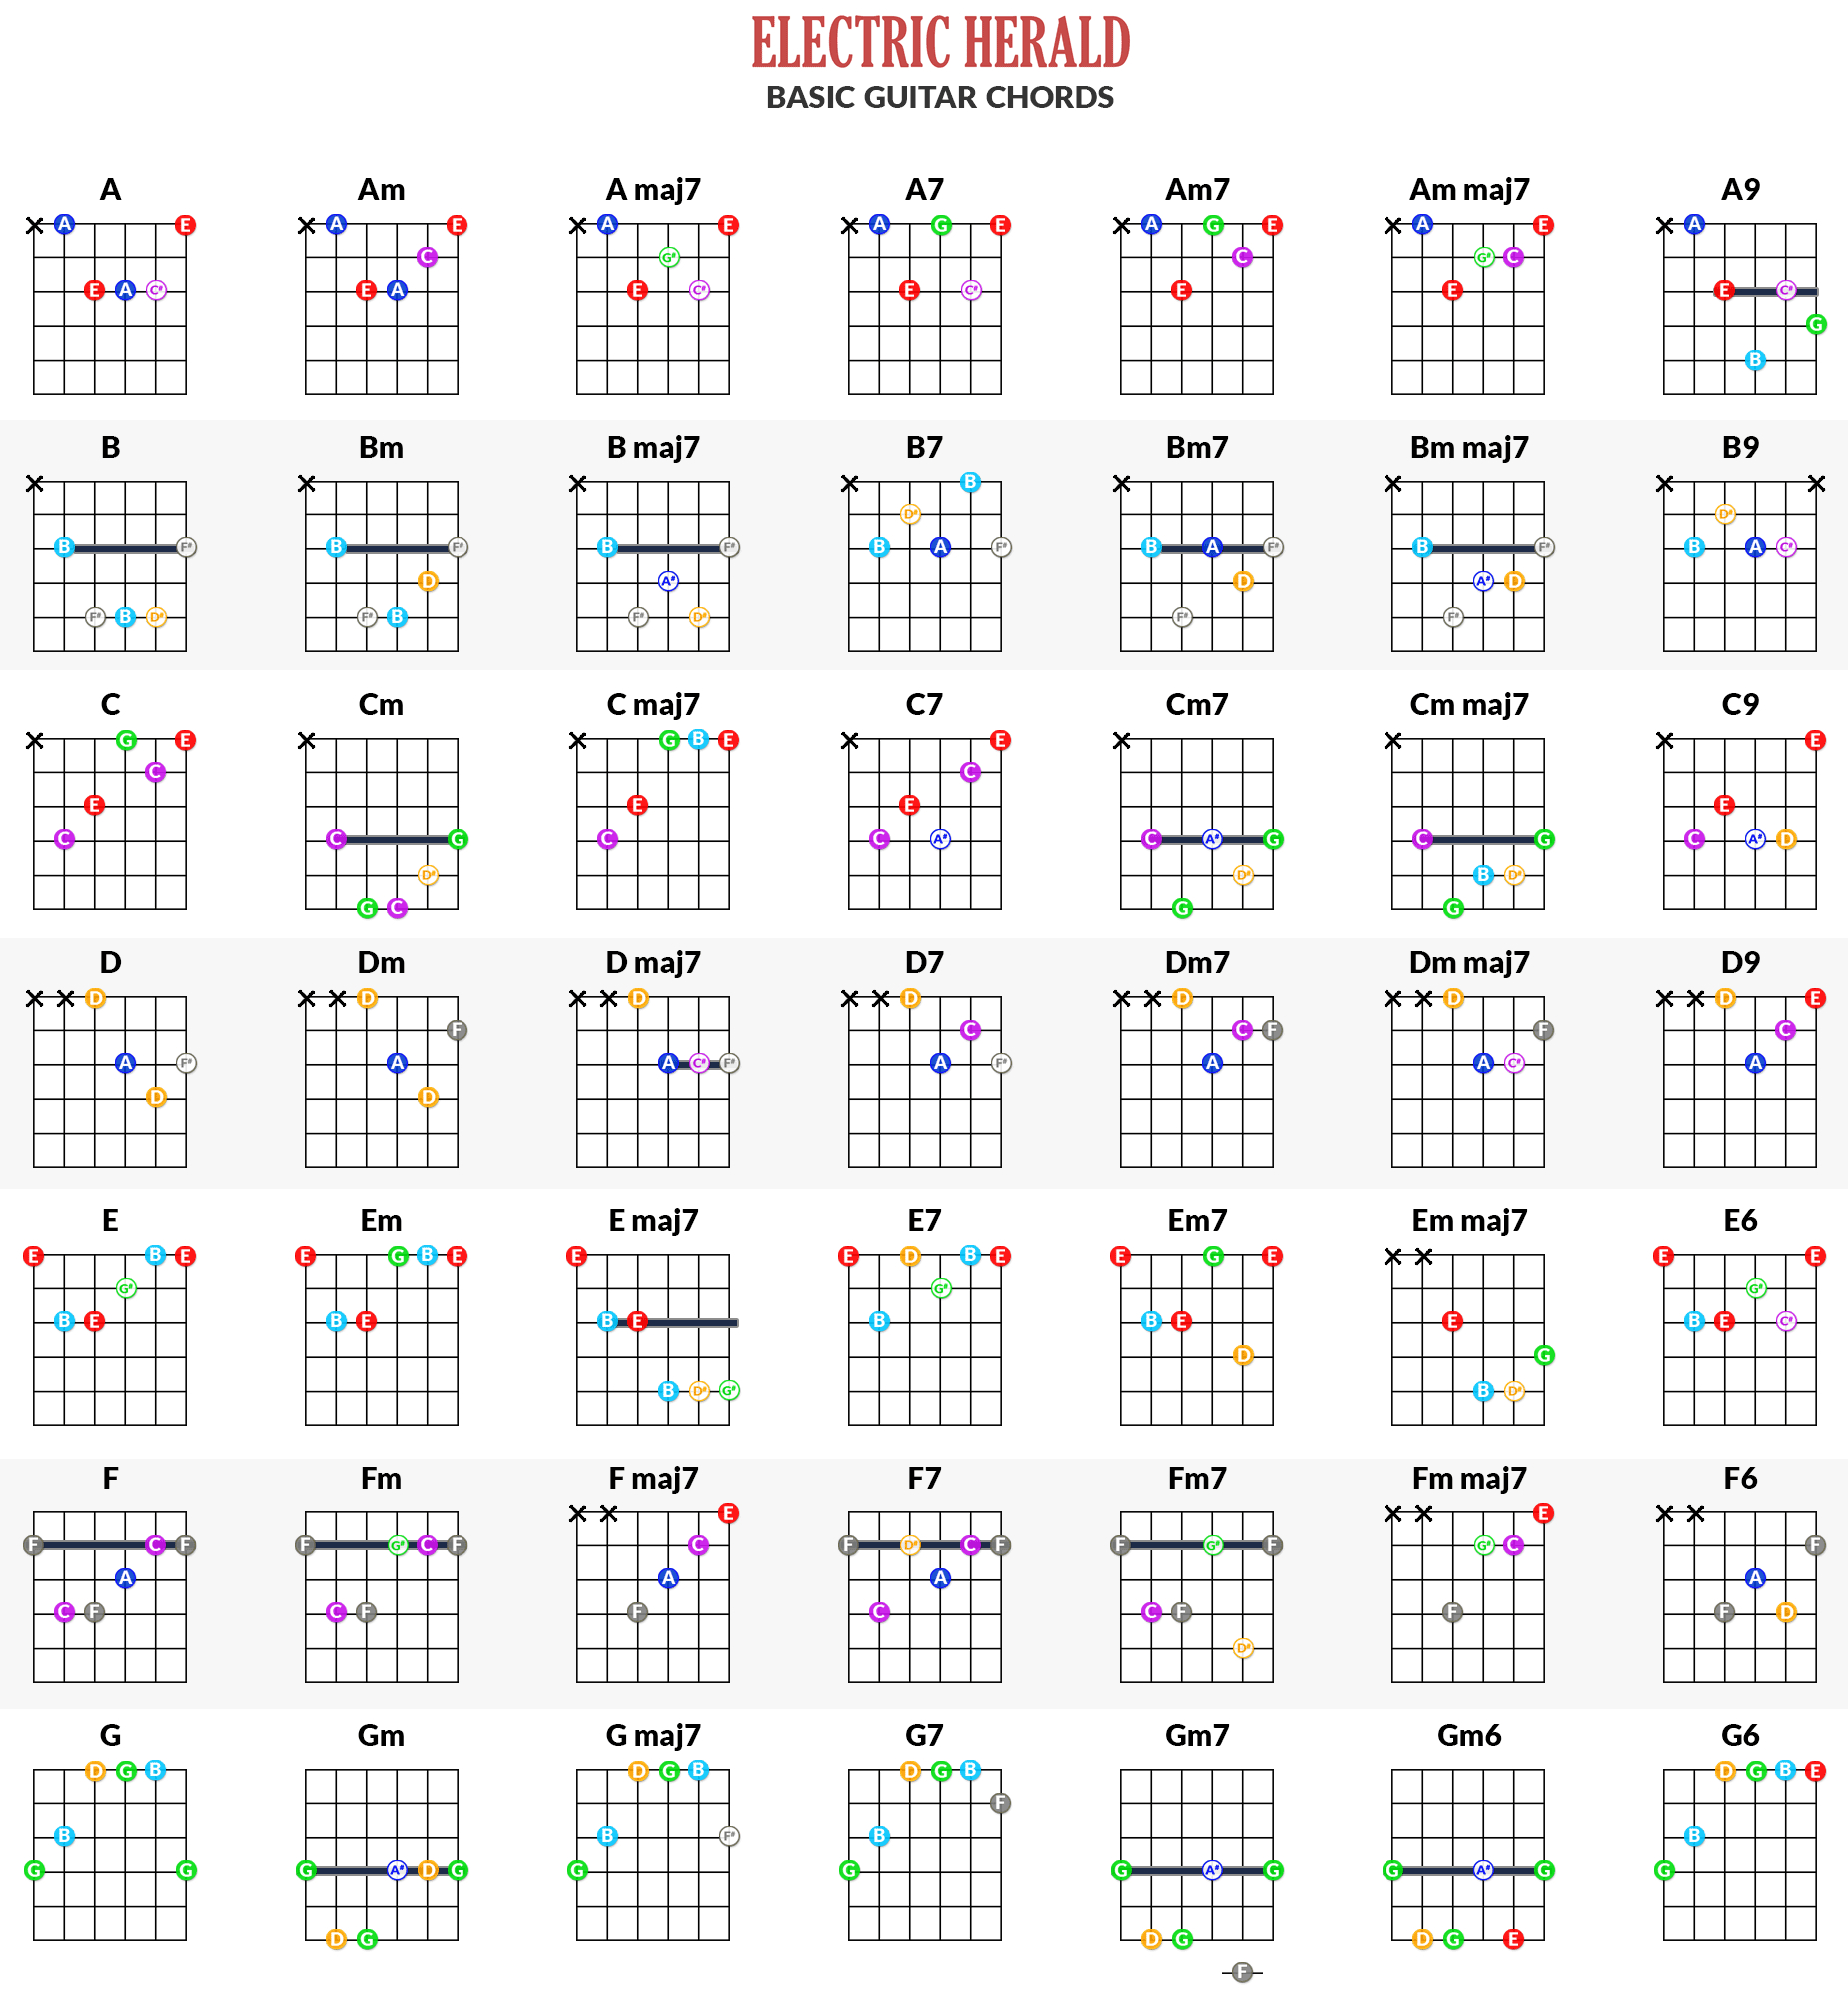 Guitar Chord Chart Online Guitar Chords Chart Free App Electric Herald